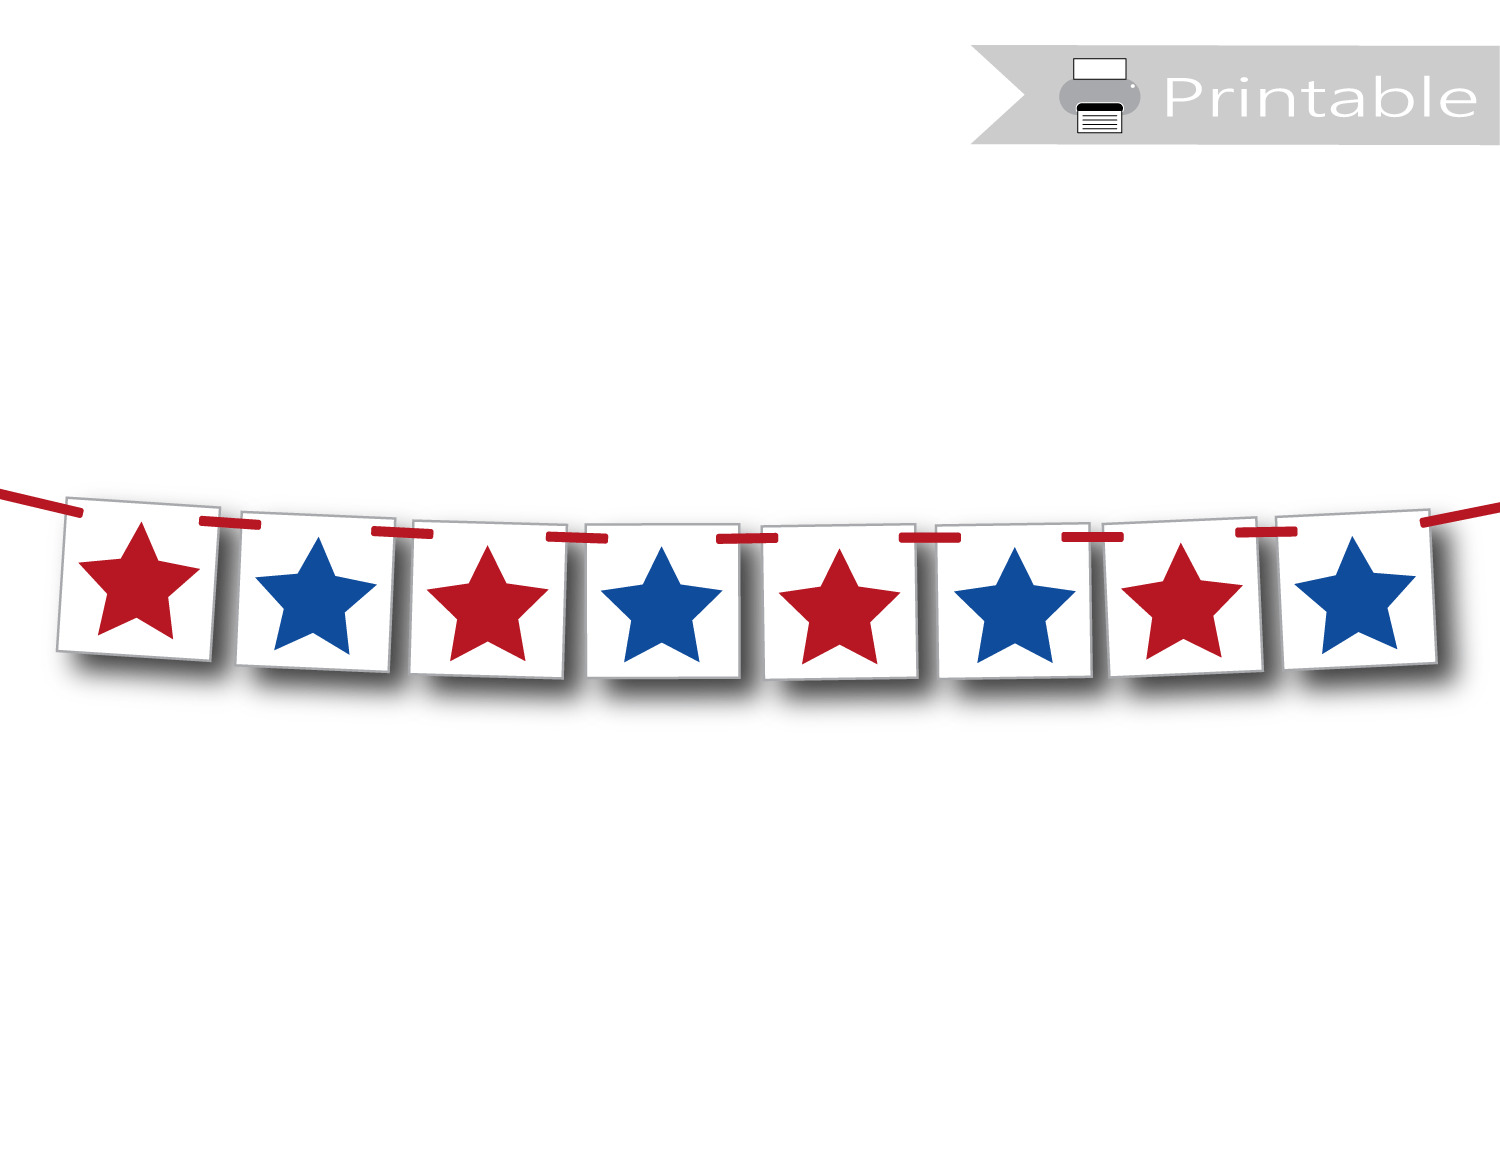 printable star banner - 4th of july decoration - Celebrating Together